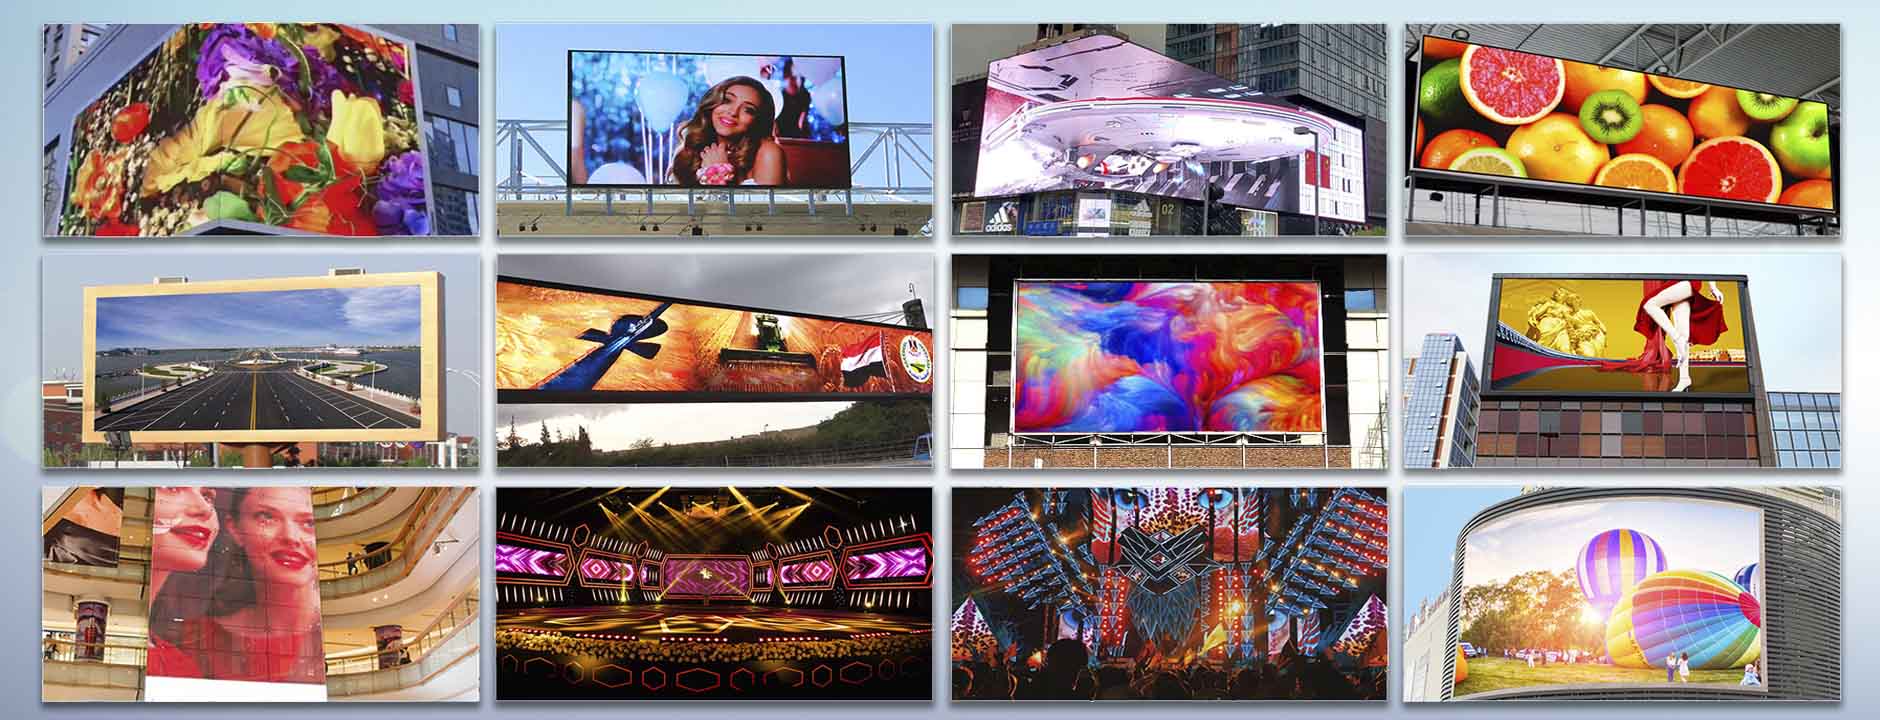 electronic billboards